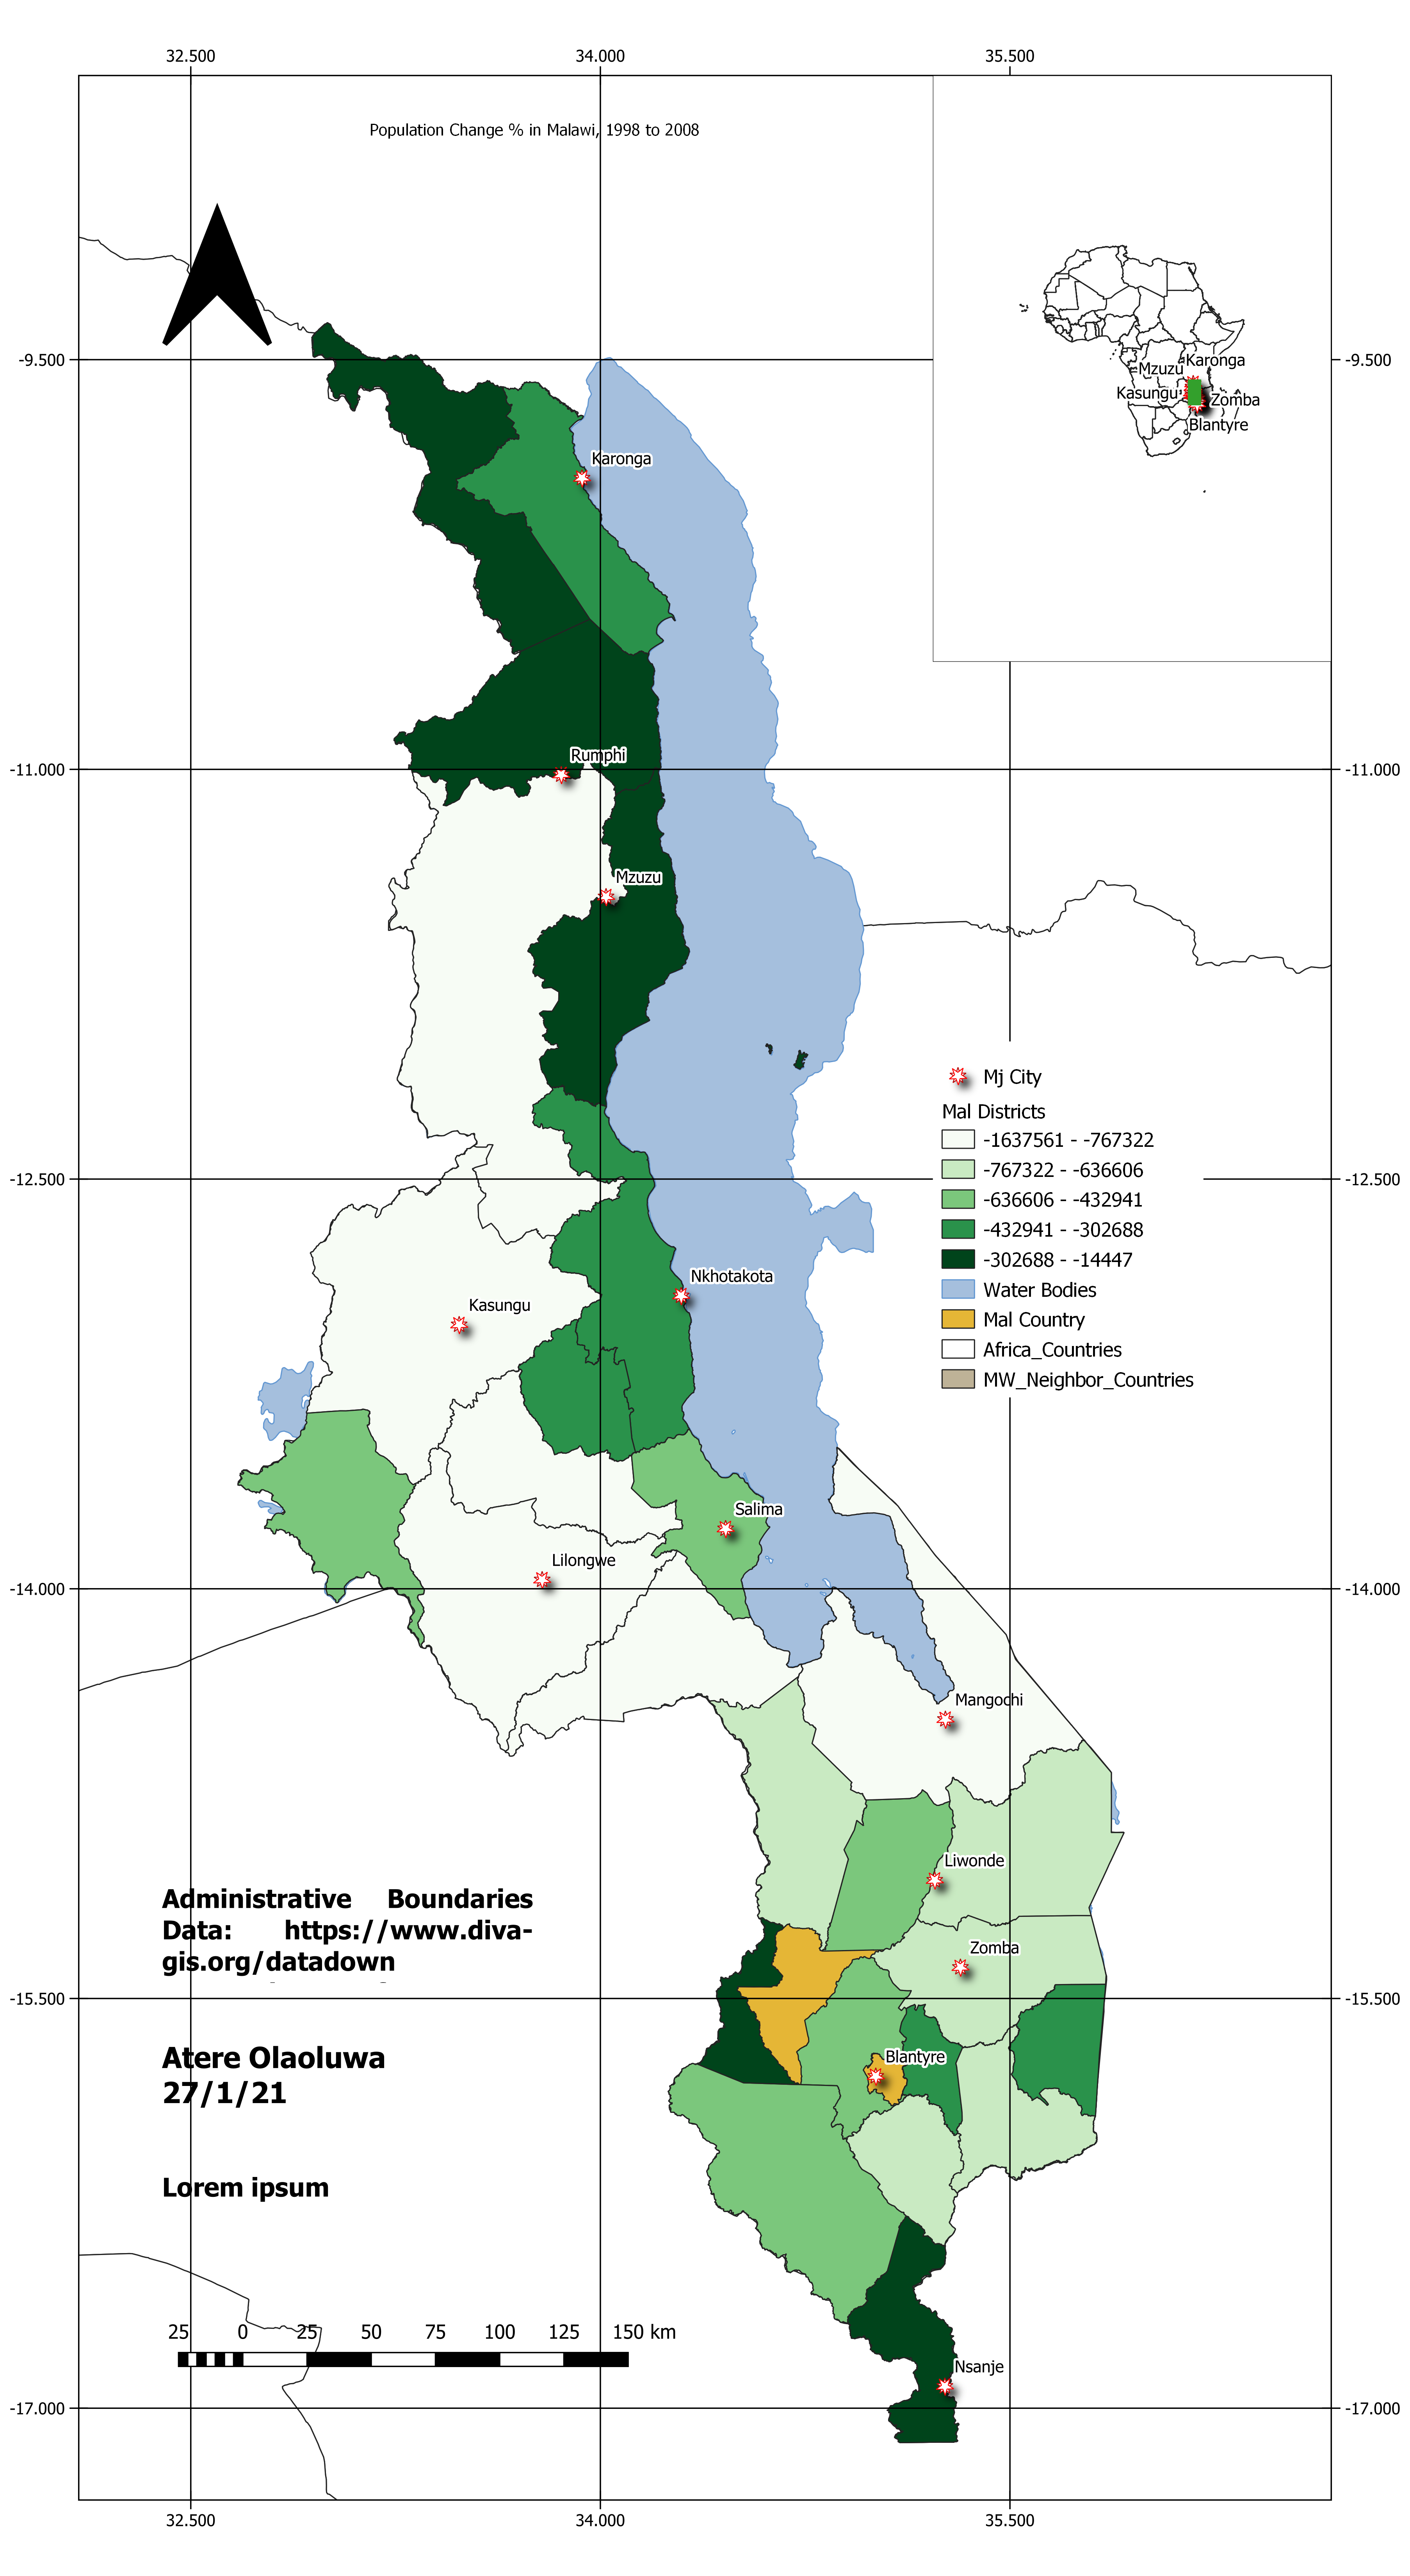 Population Change in Malawi